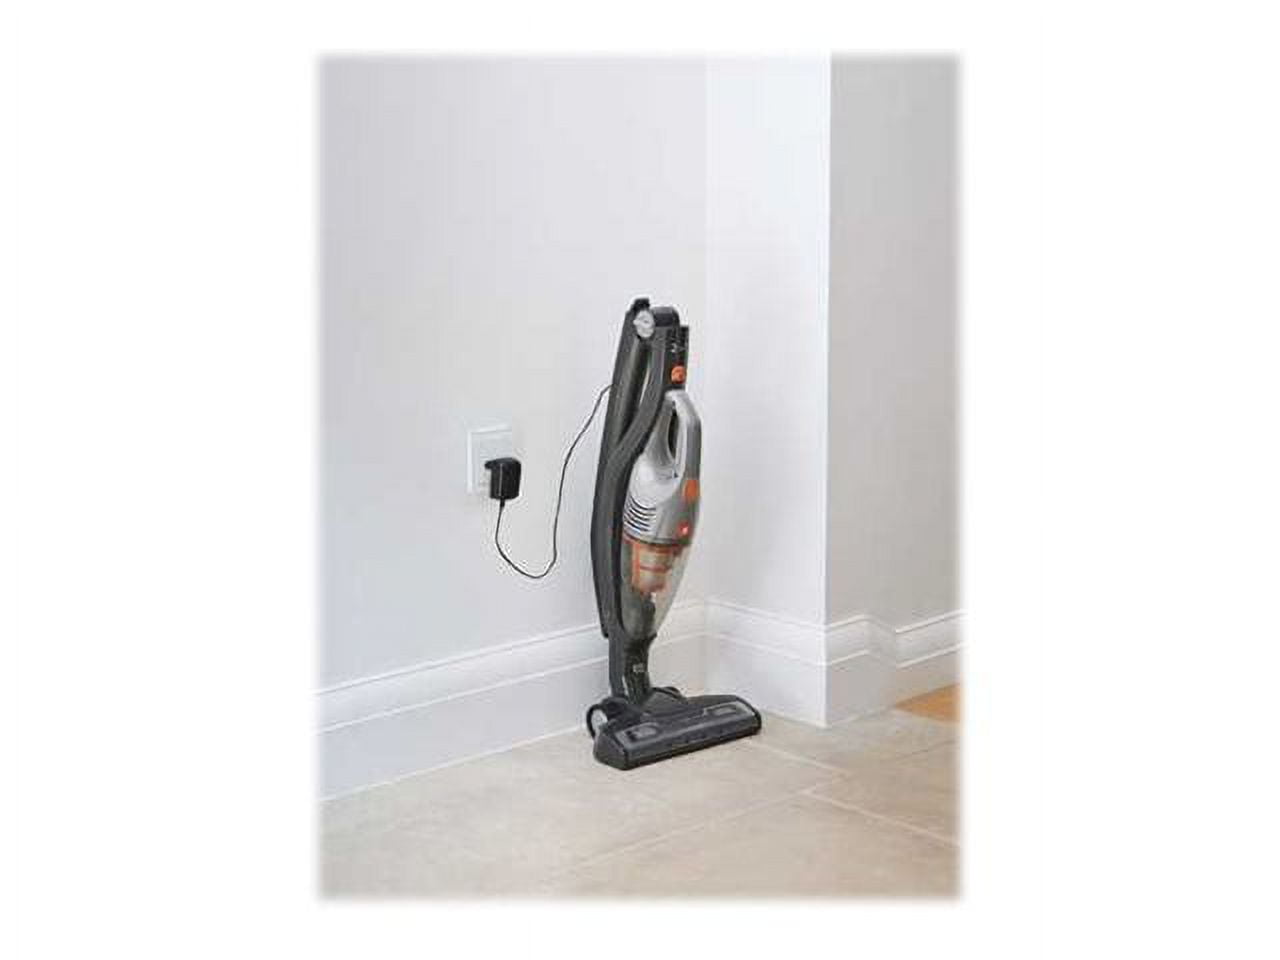 POWERSERIES+™ Cordless Stick Vacuum